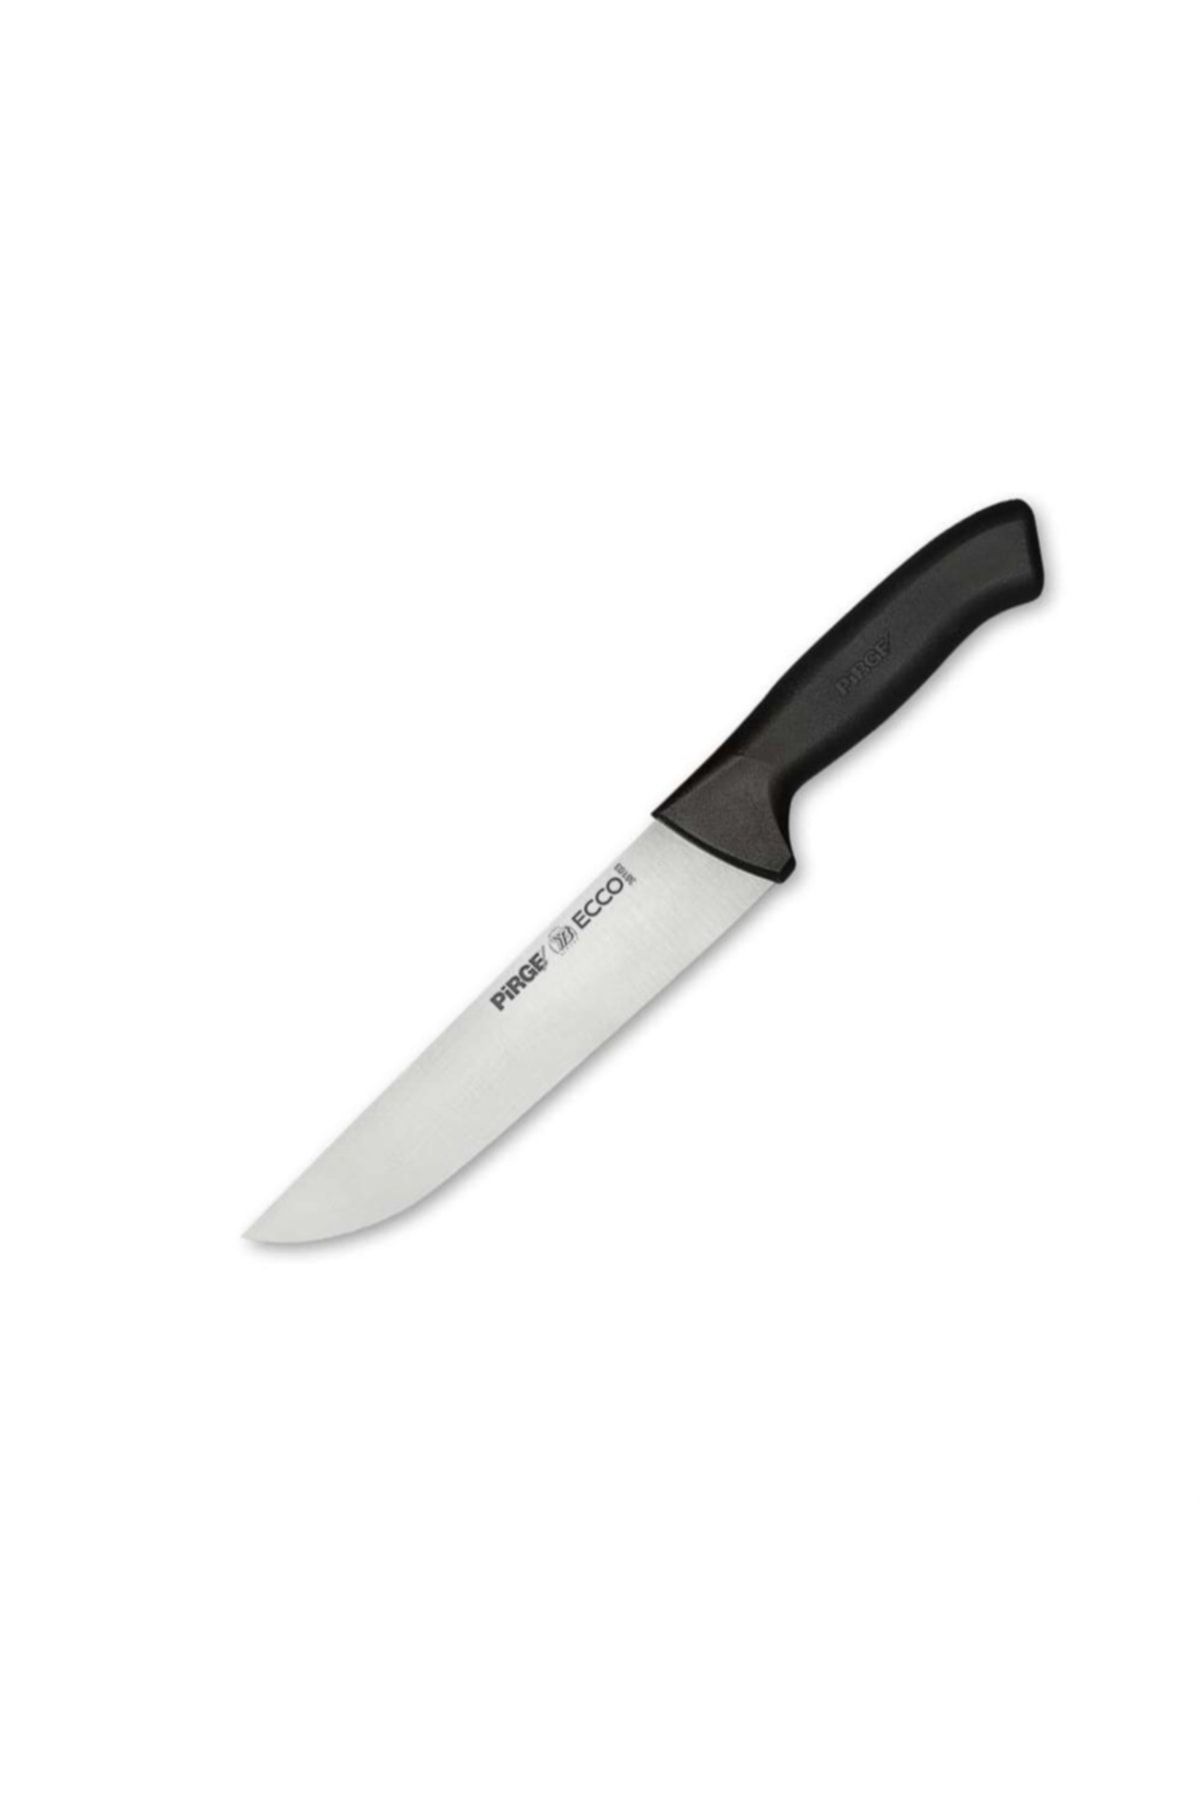 Pirge Ecco Mutfak Bıçağı No:3 19 Cm